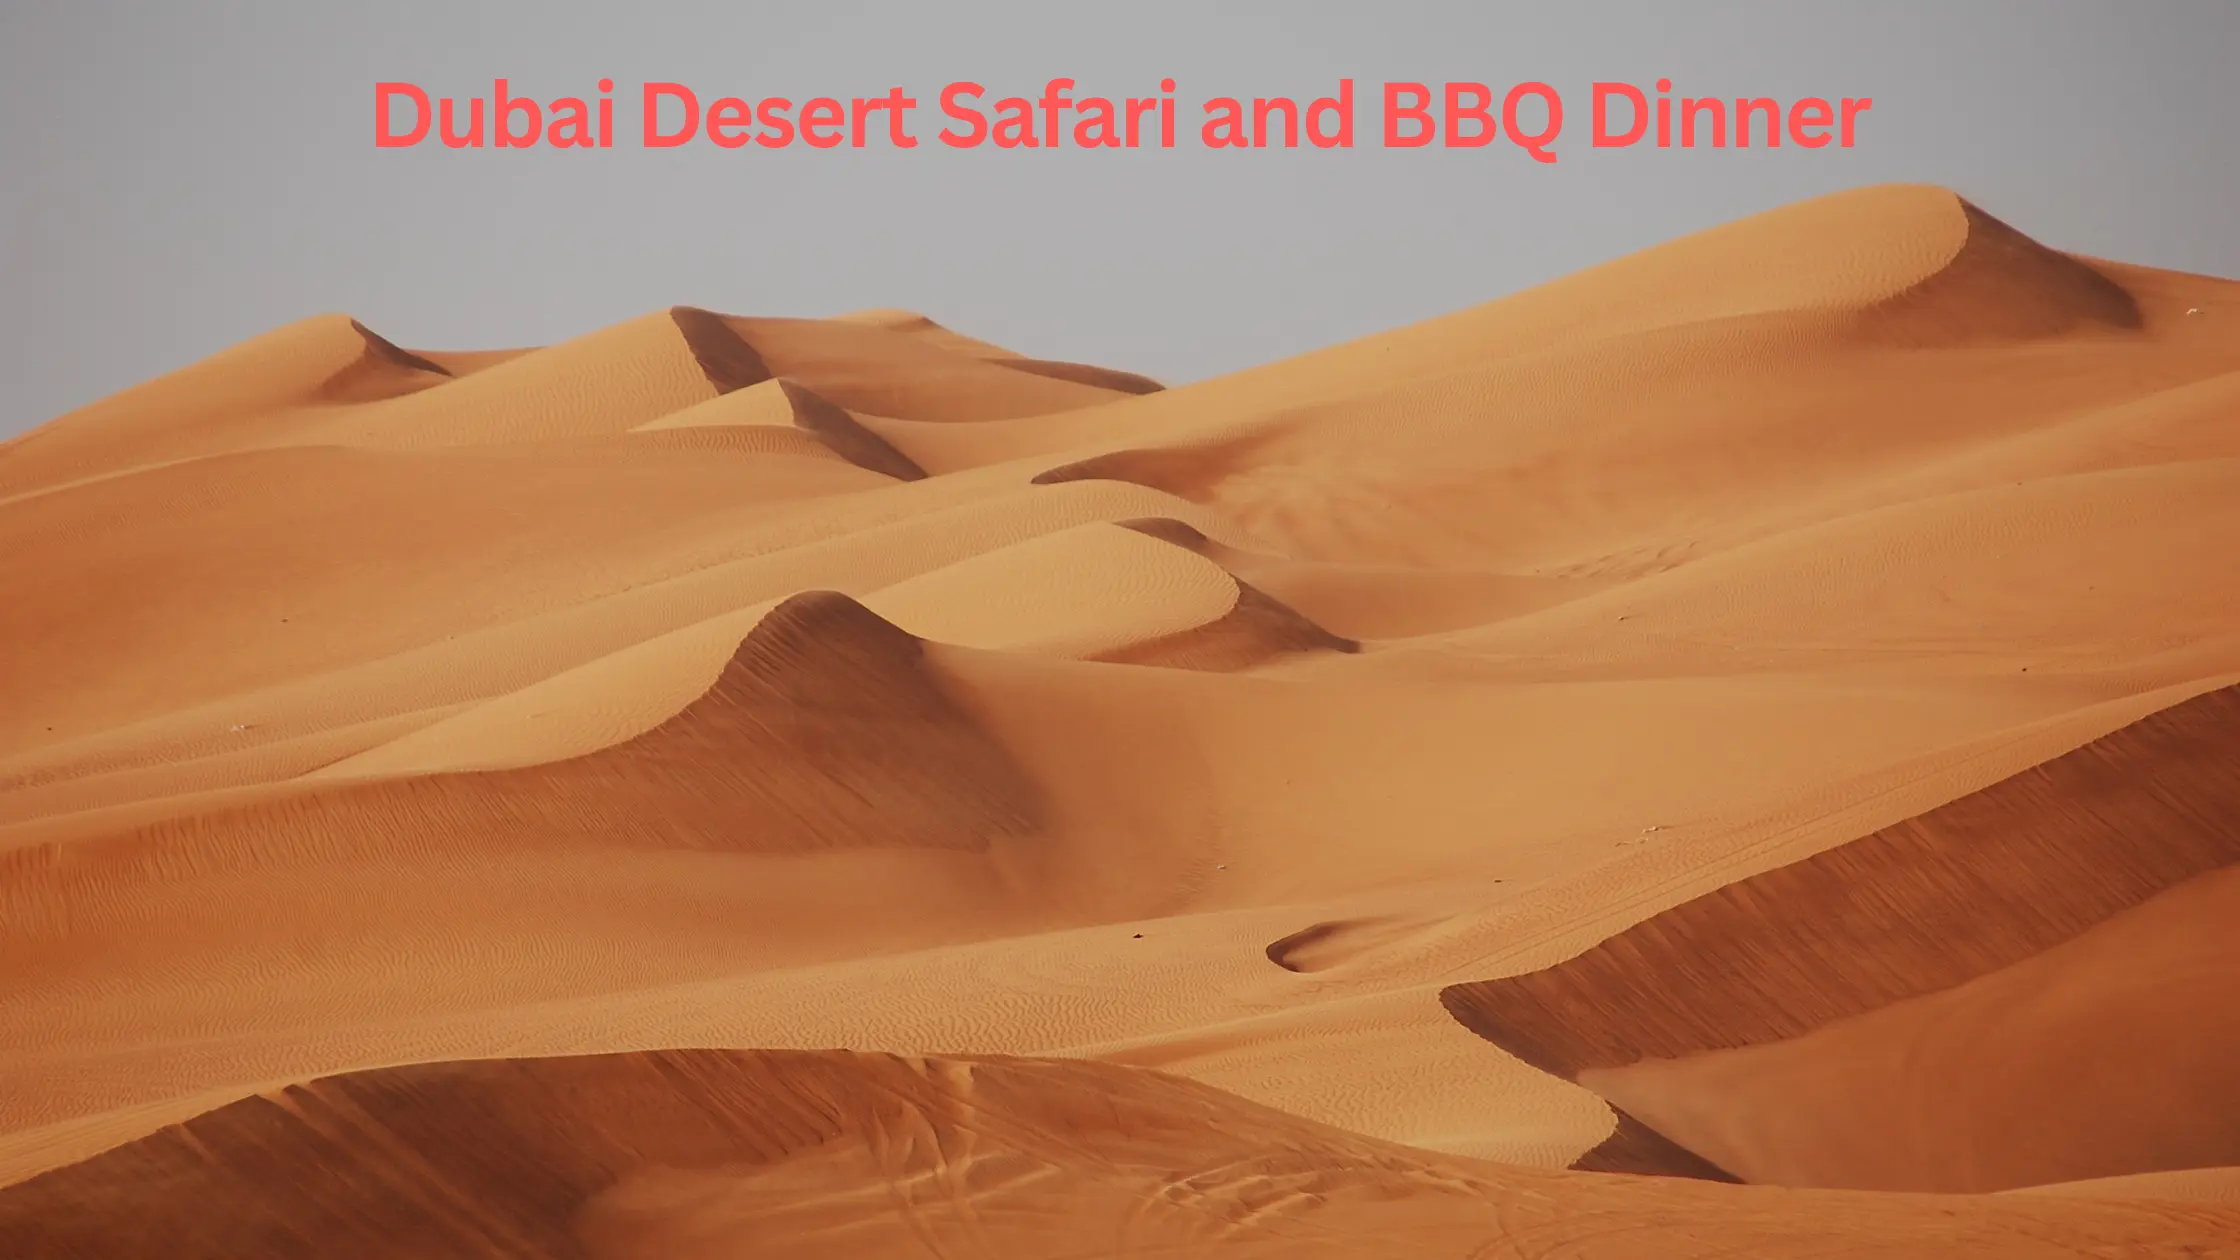 Dubai Desert Safari and BBQ Dinner